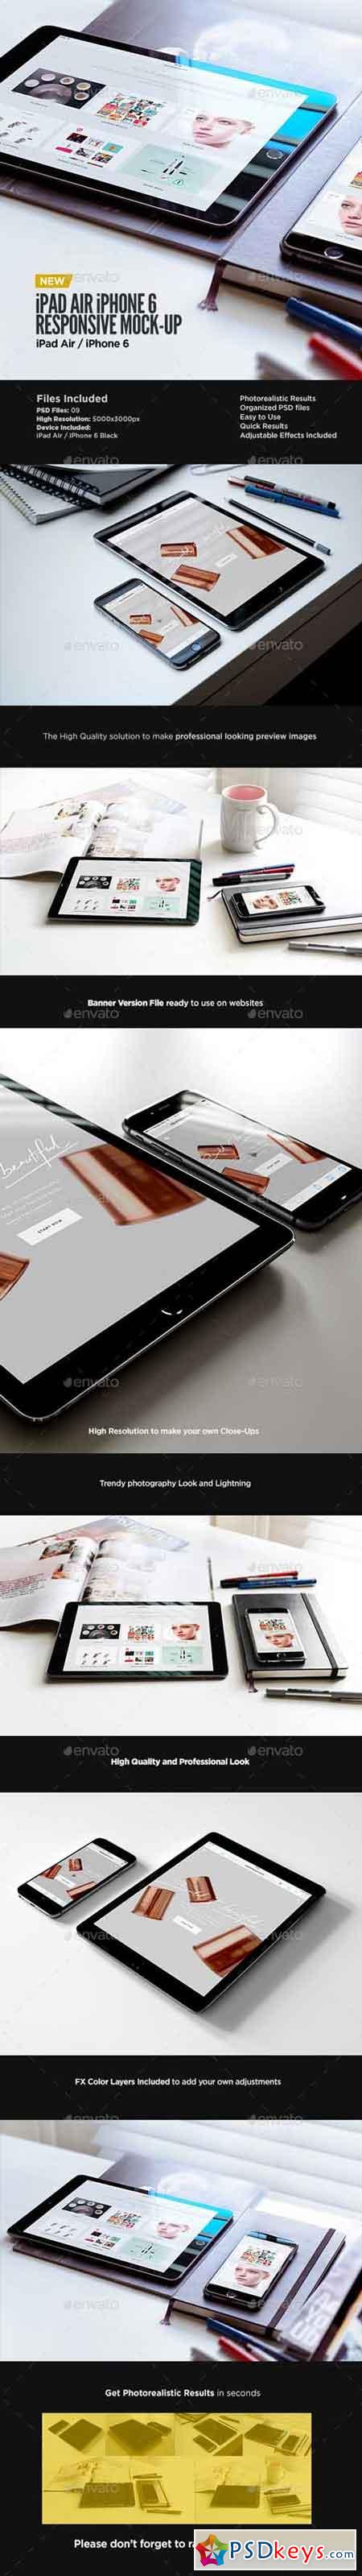 Tablet iPad Air iPhone 6 Black Display Mock-Up 13794917